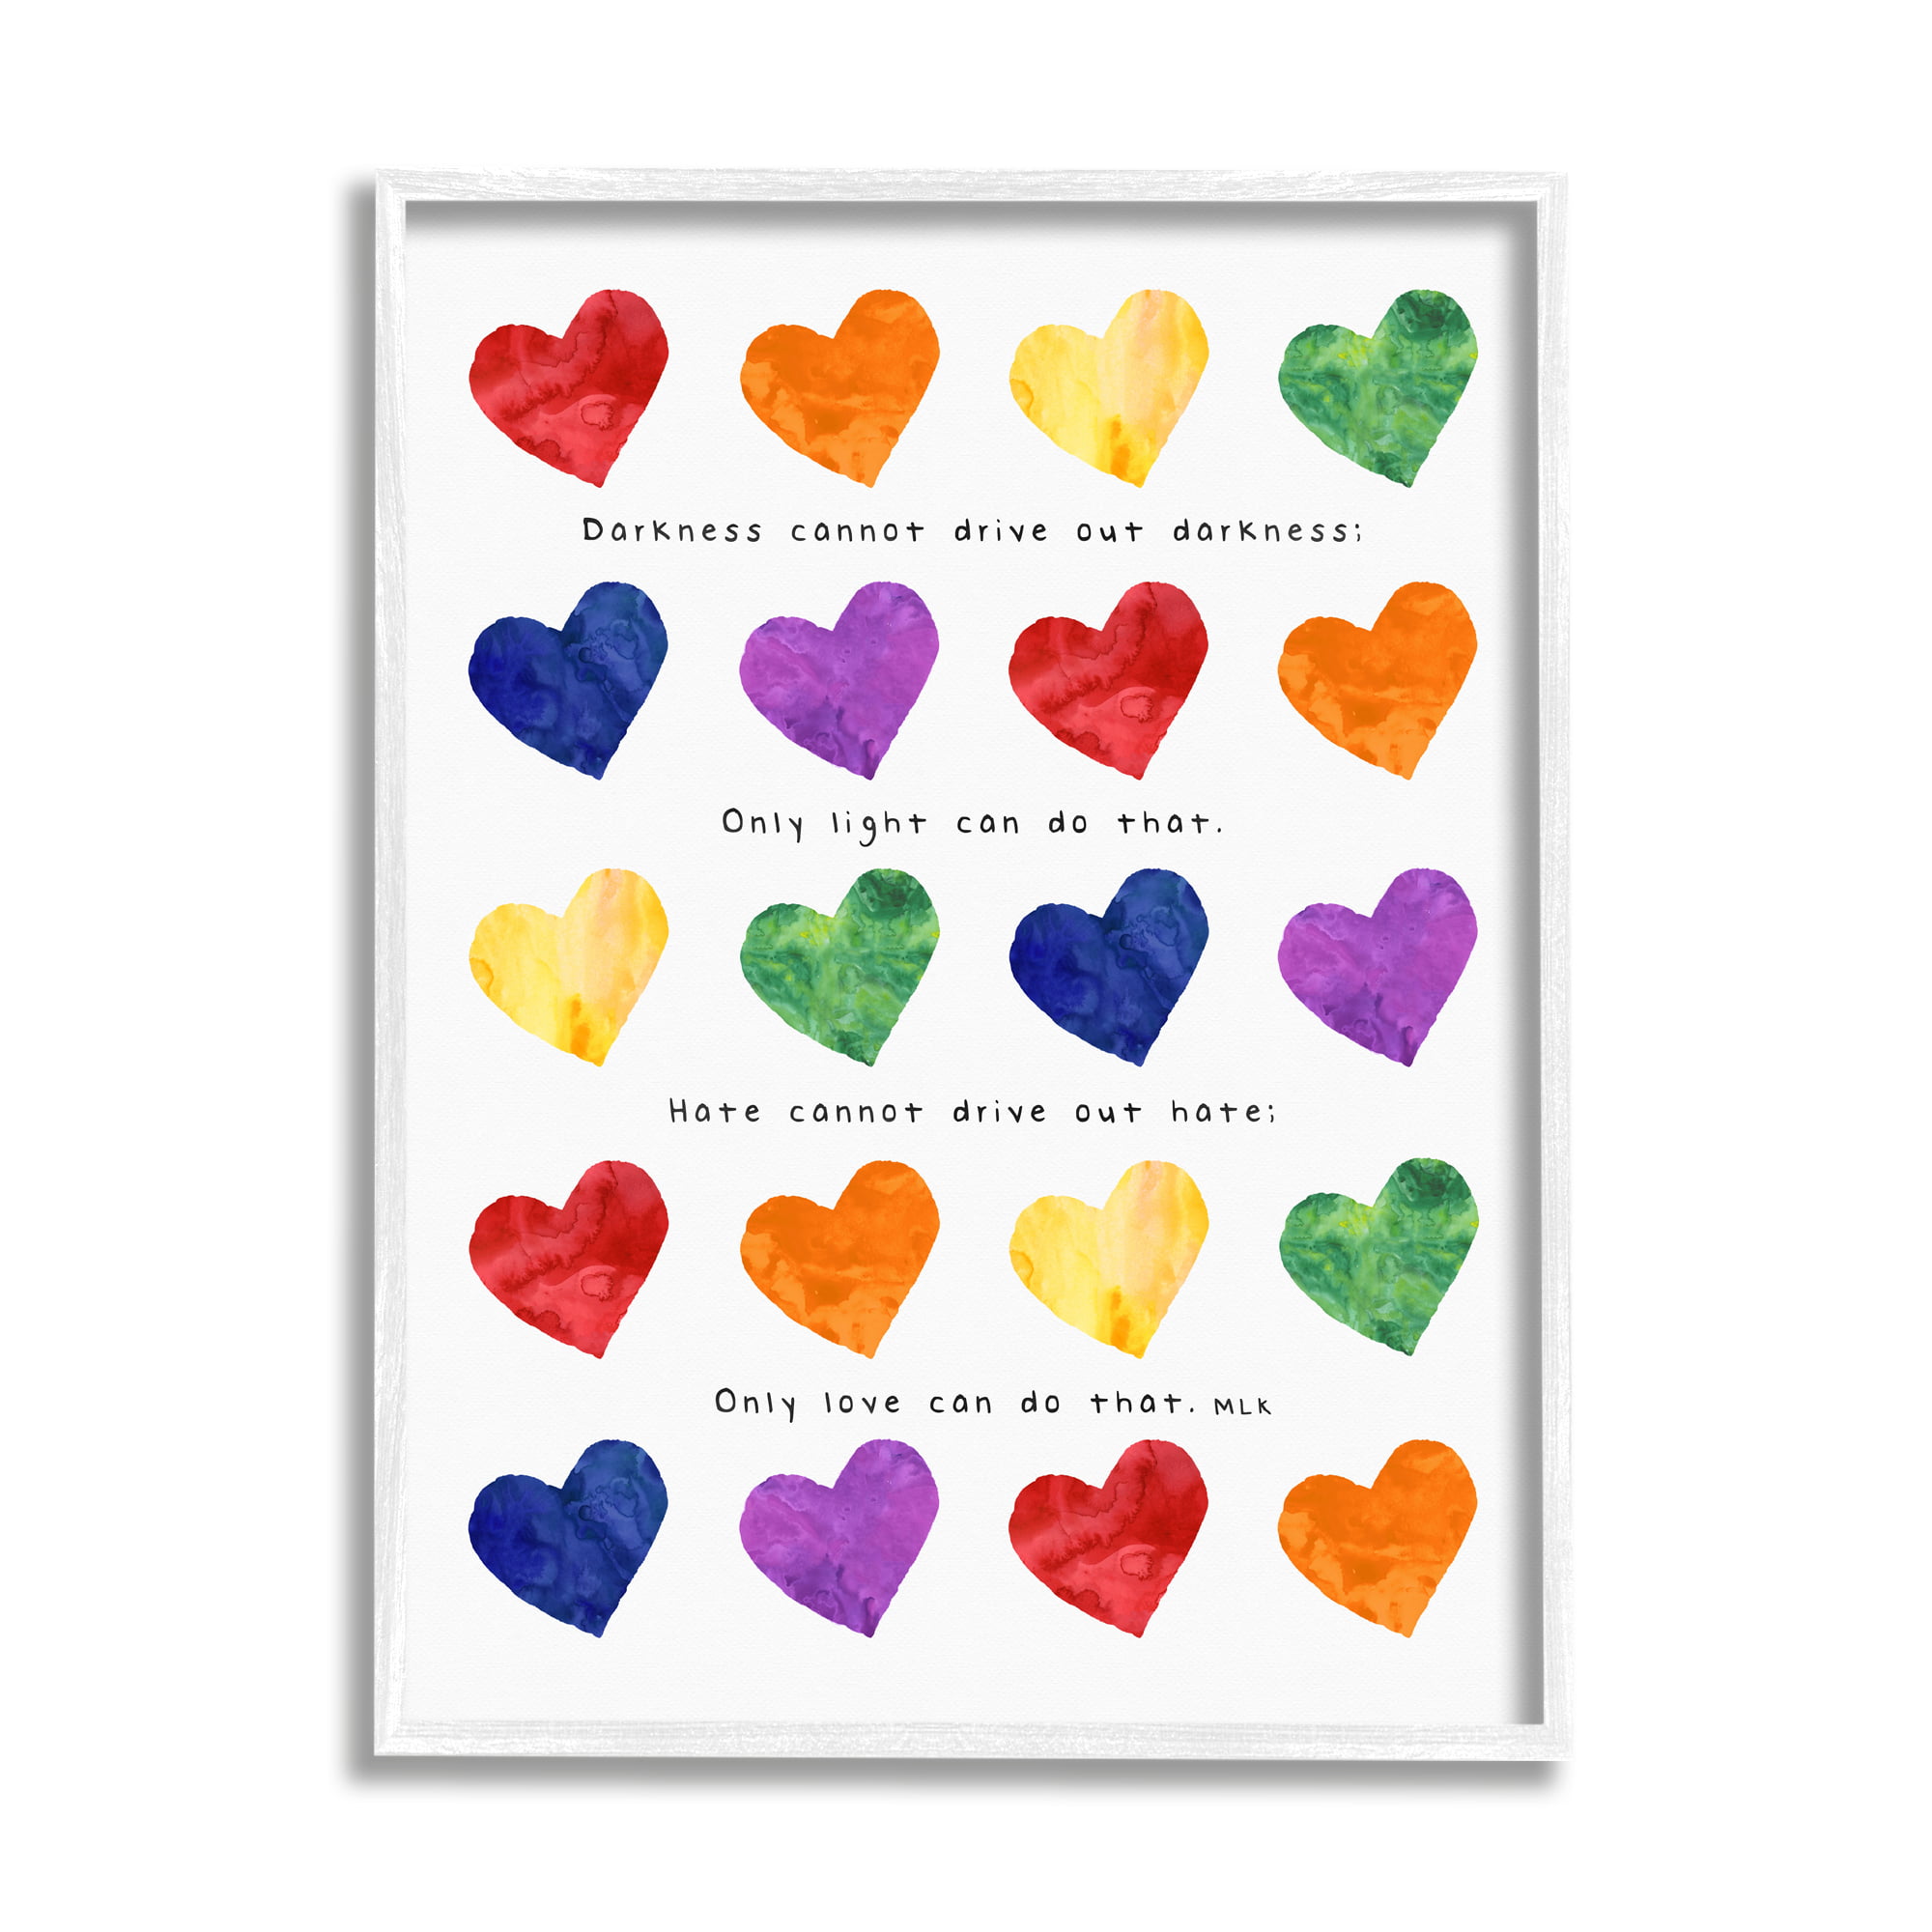 White Stupell Industries Only Love Can Famous MLK Phrase Heart Pattern Design by Erica Billups Black Framed Wall Art 11 x 14